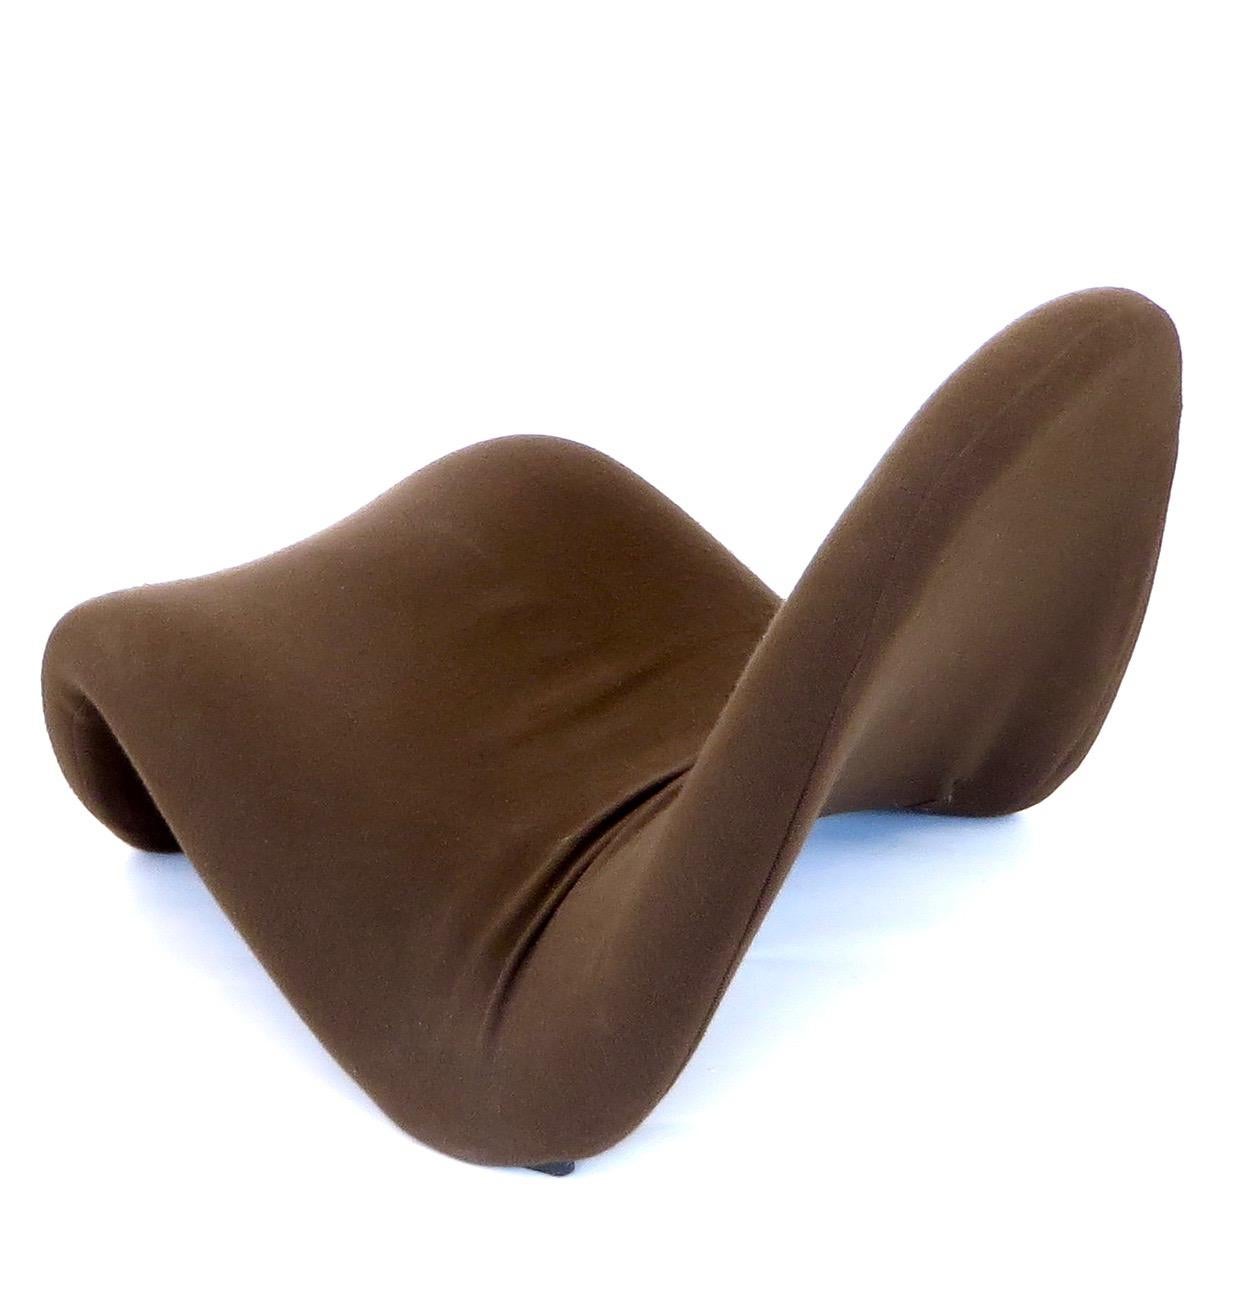 Fabric Pierre Paulin Tongue Chair by Artifort